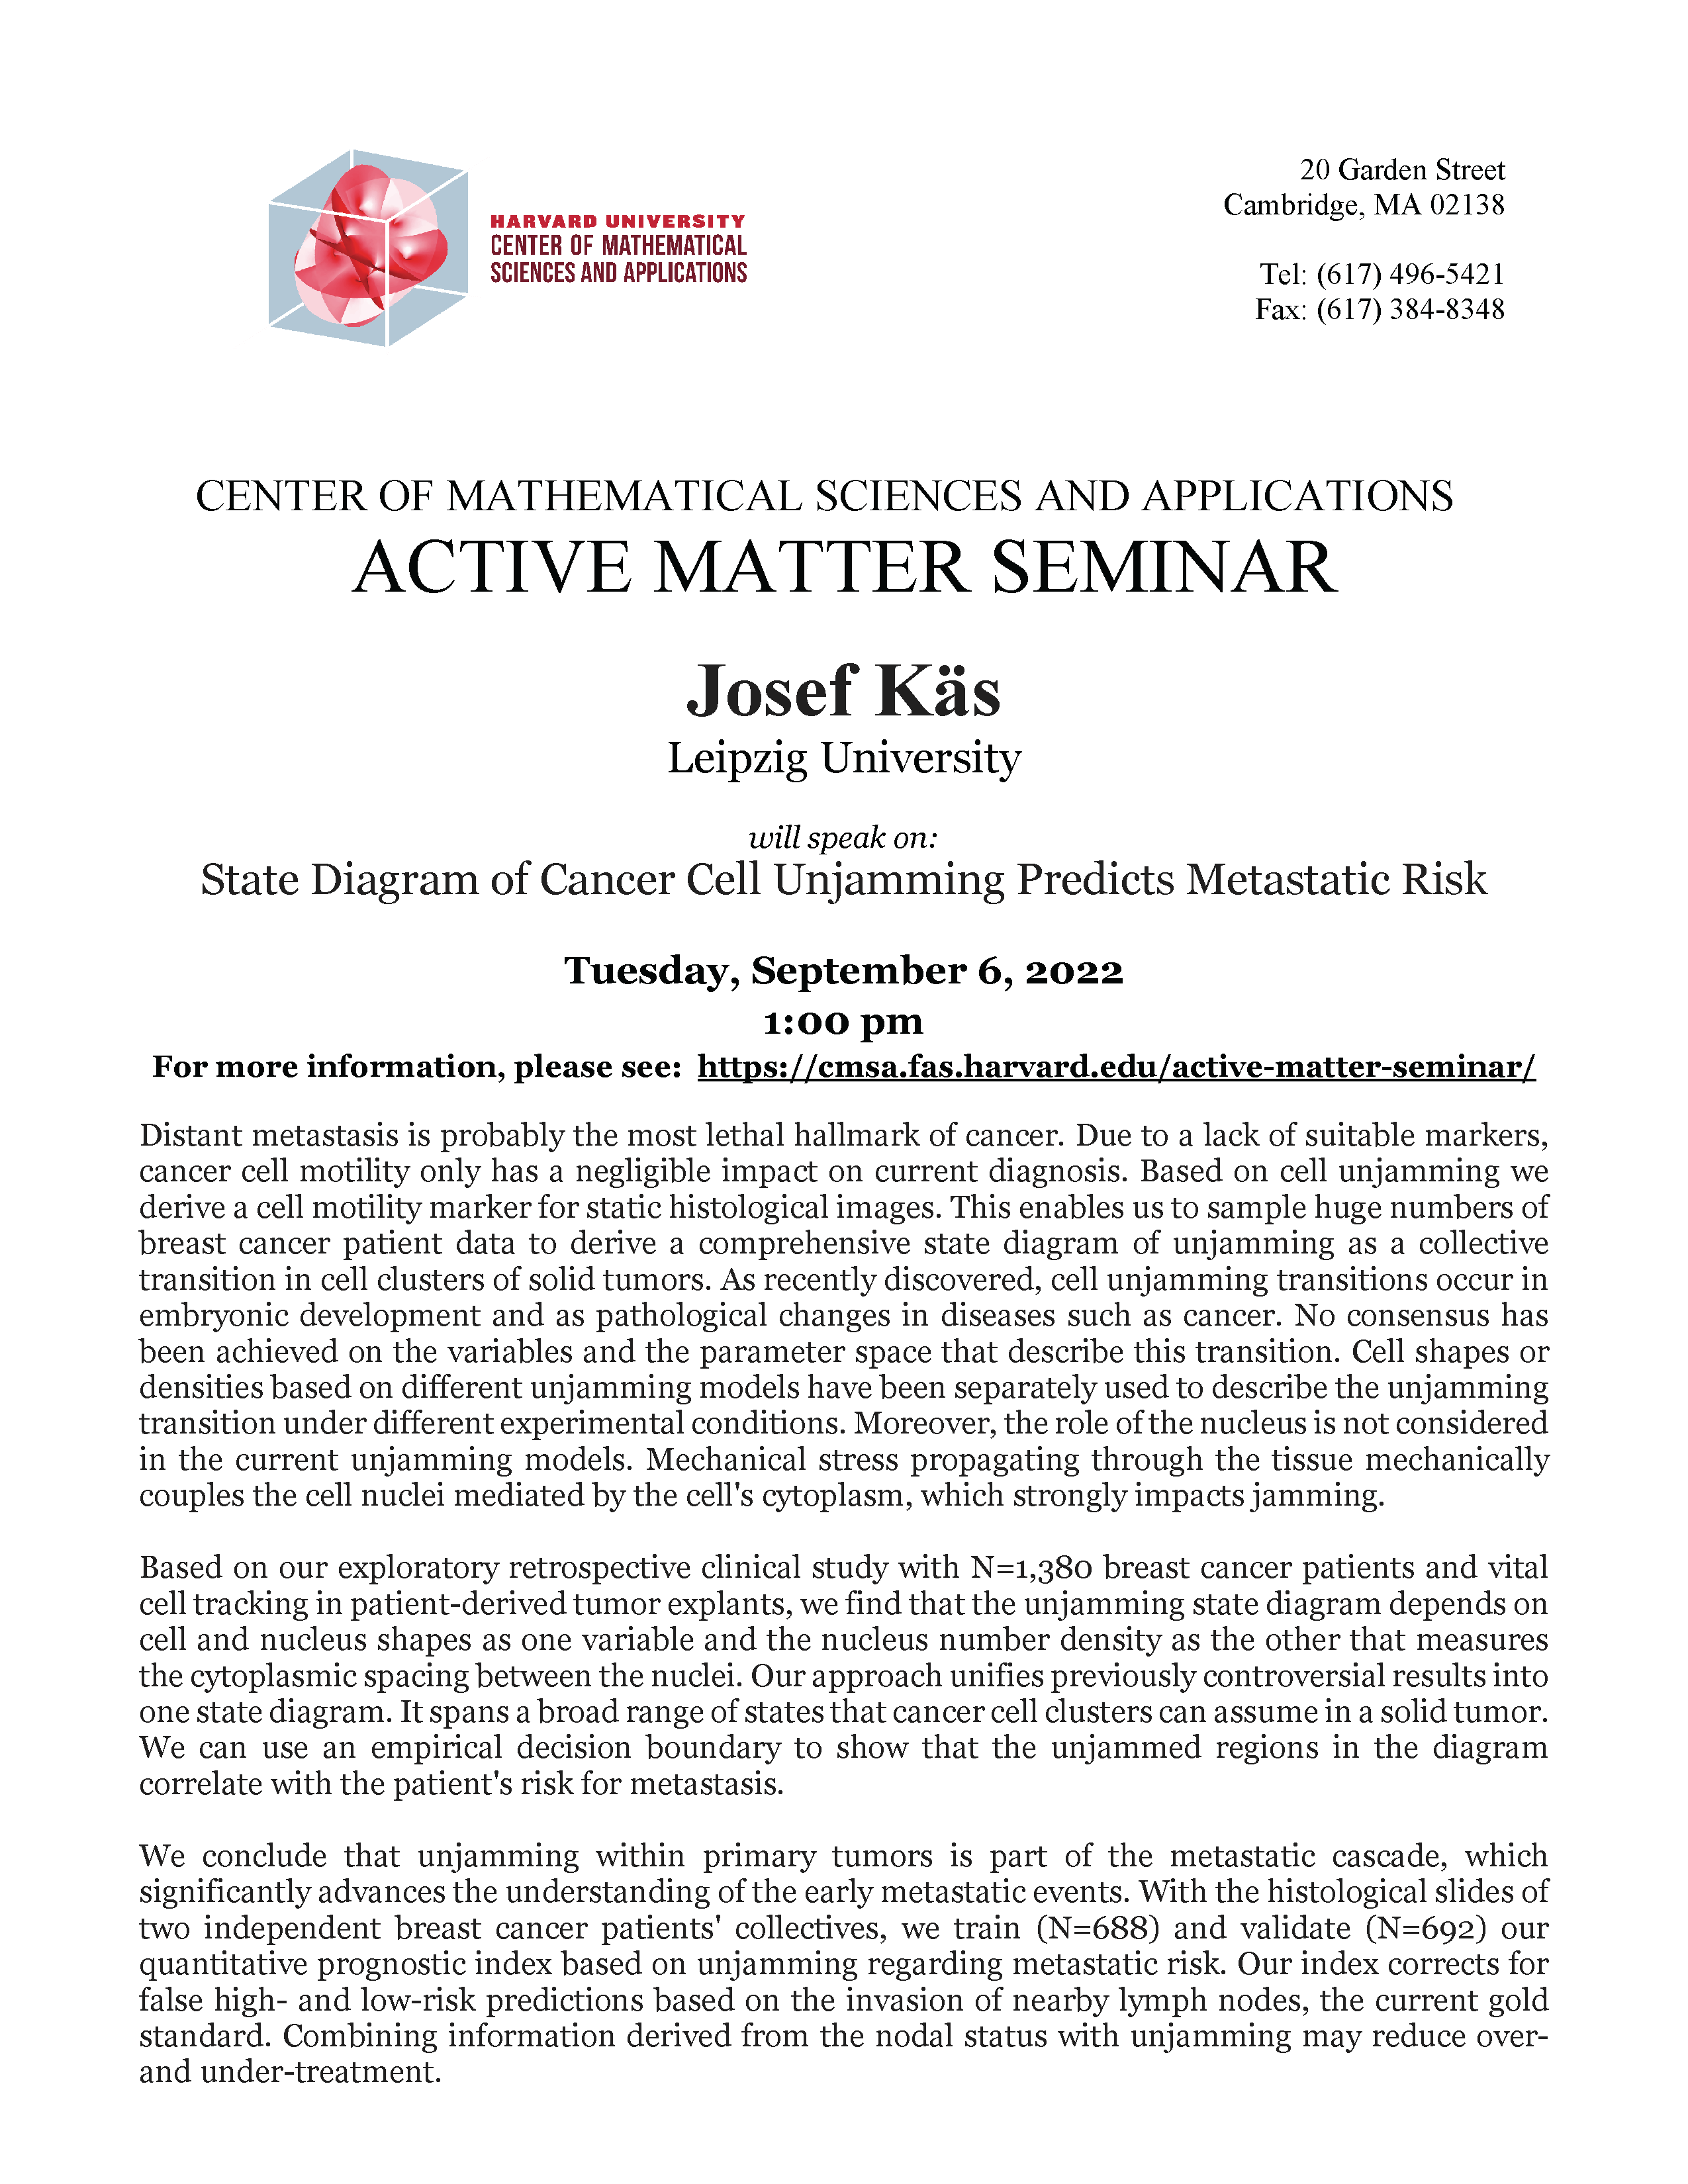 CMSA Active Matter Seminar